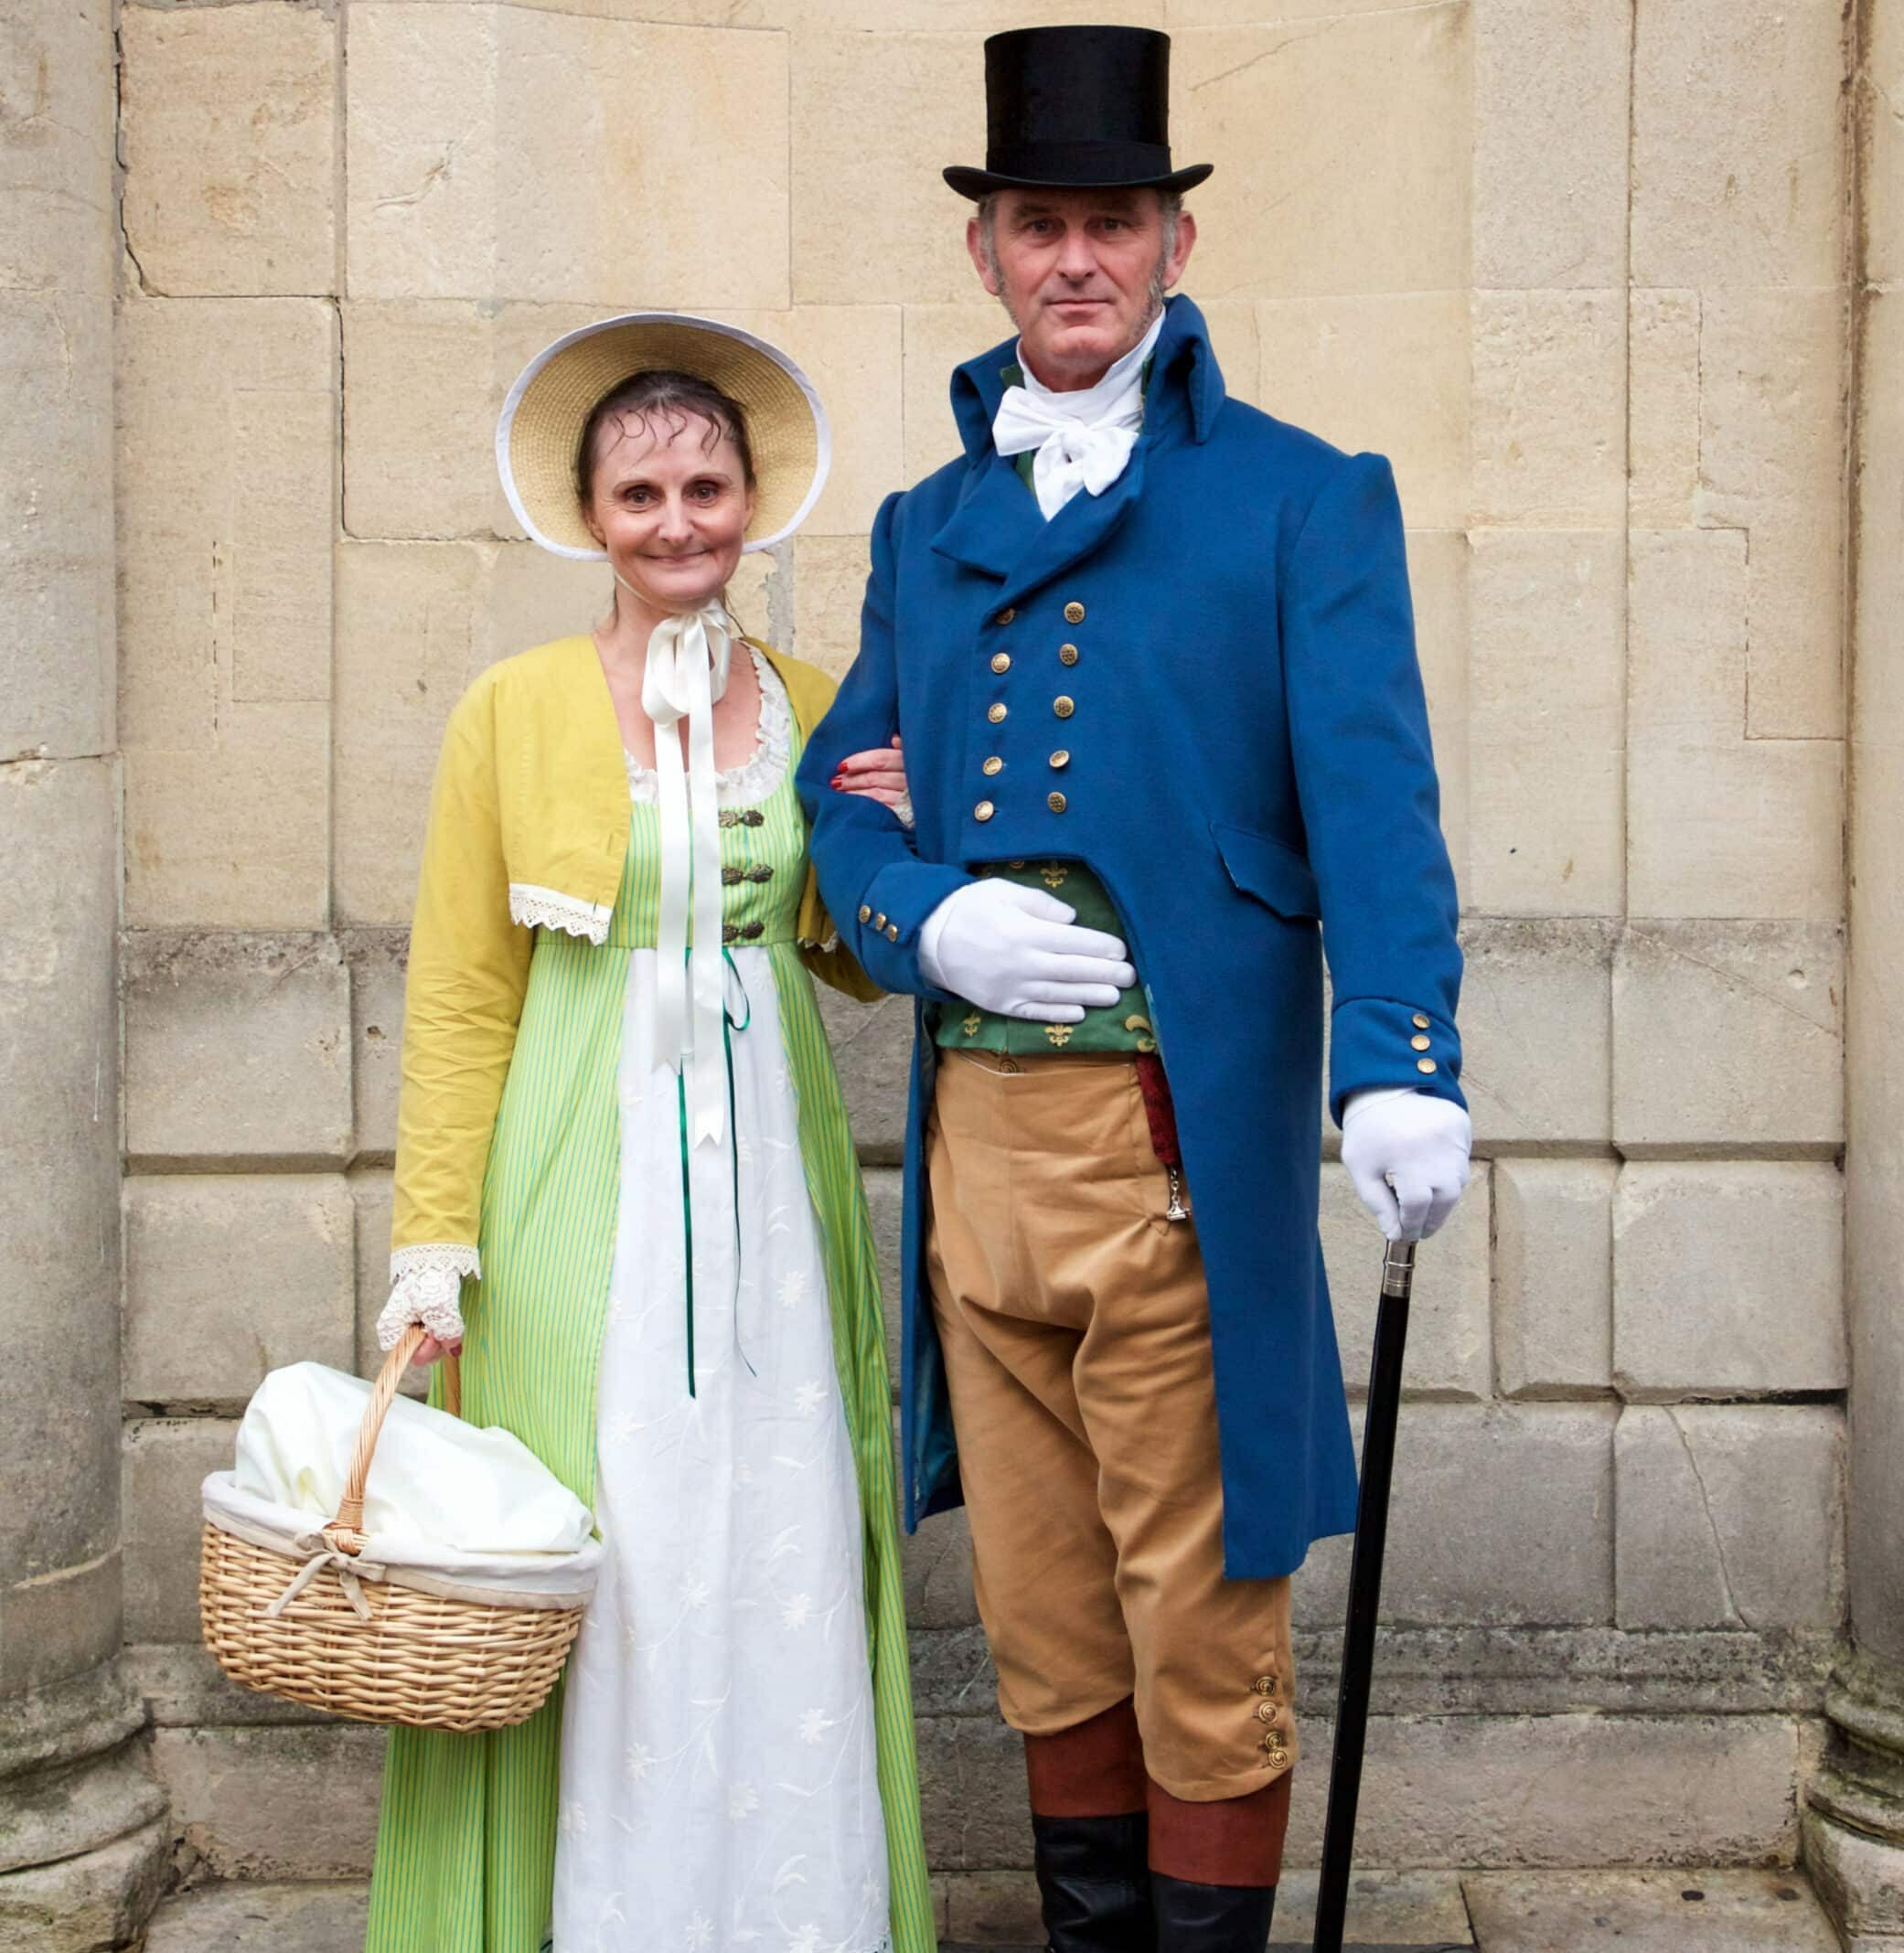 from Channel Jane Austen’s Regency Vibe in Bath on Slow Down, See More